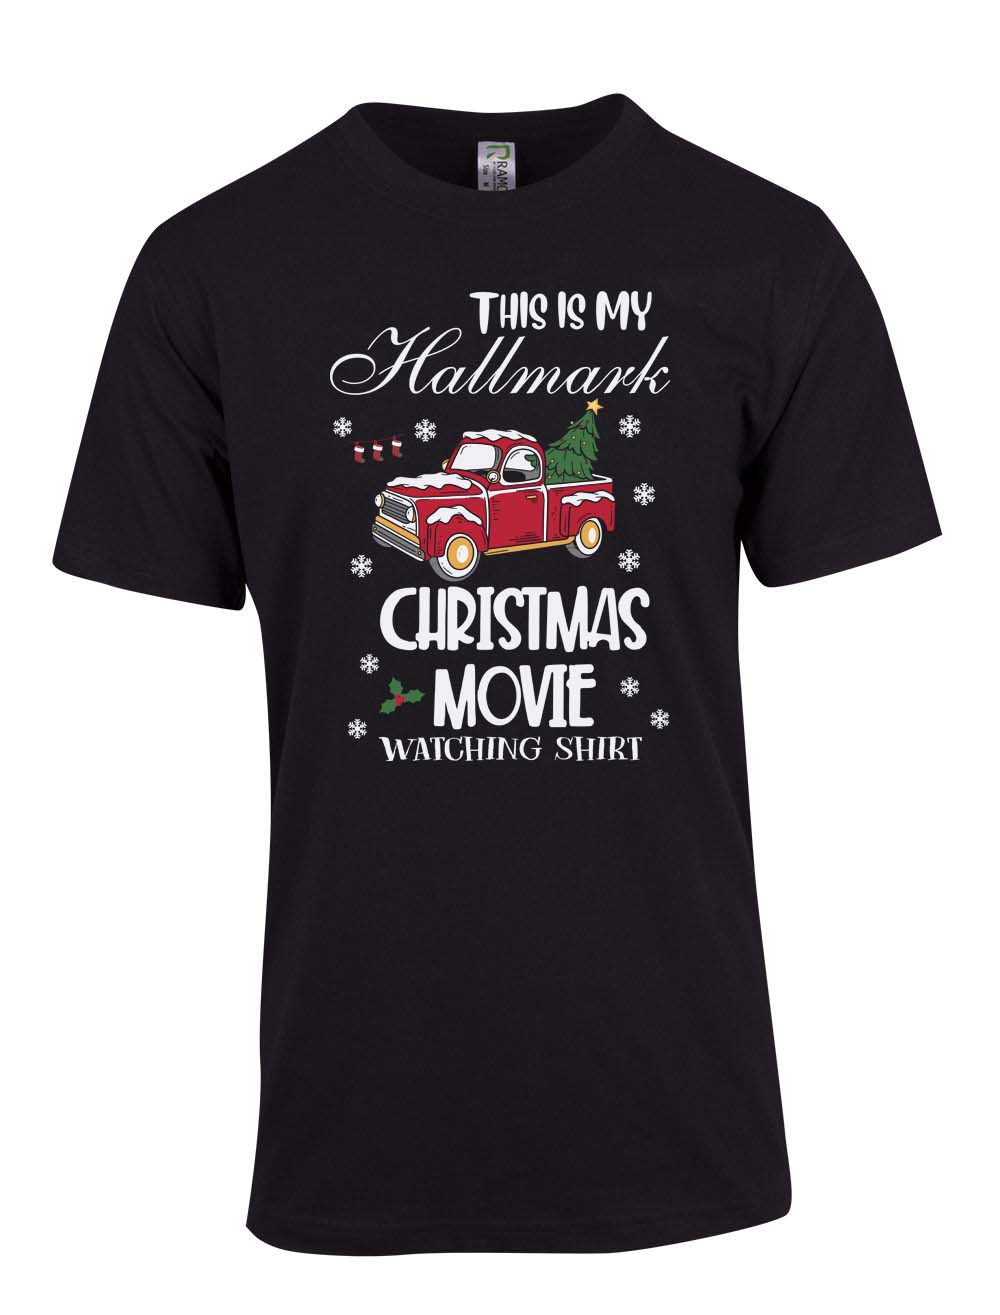 This is my Hallmark Christmas Movie T Shirt